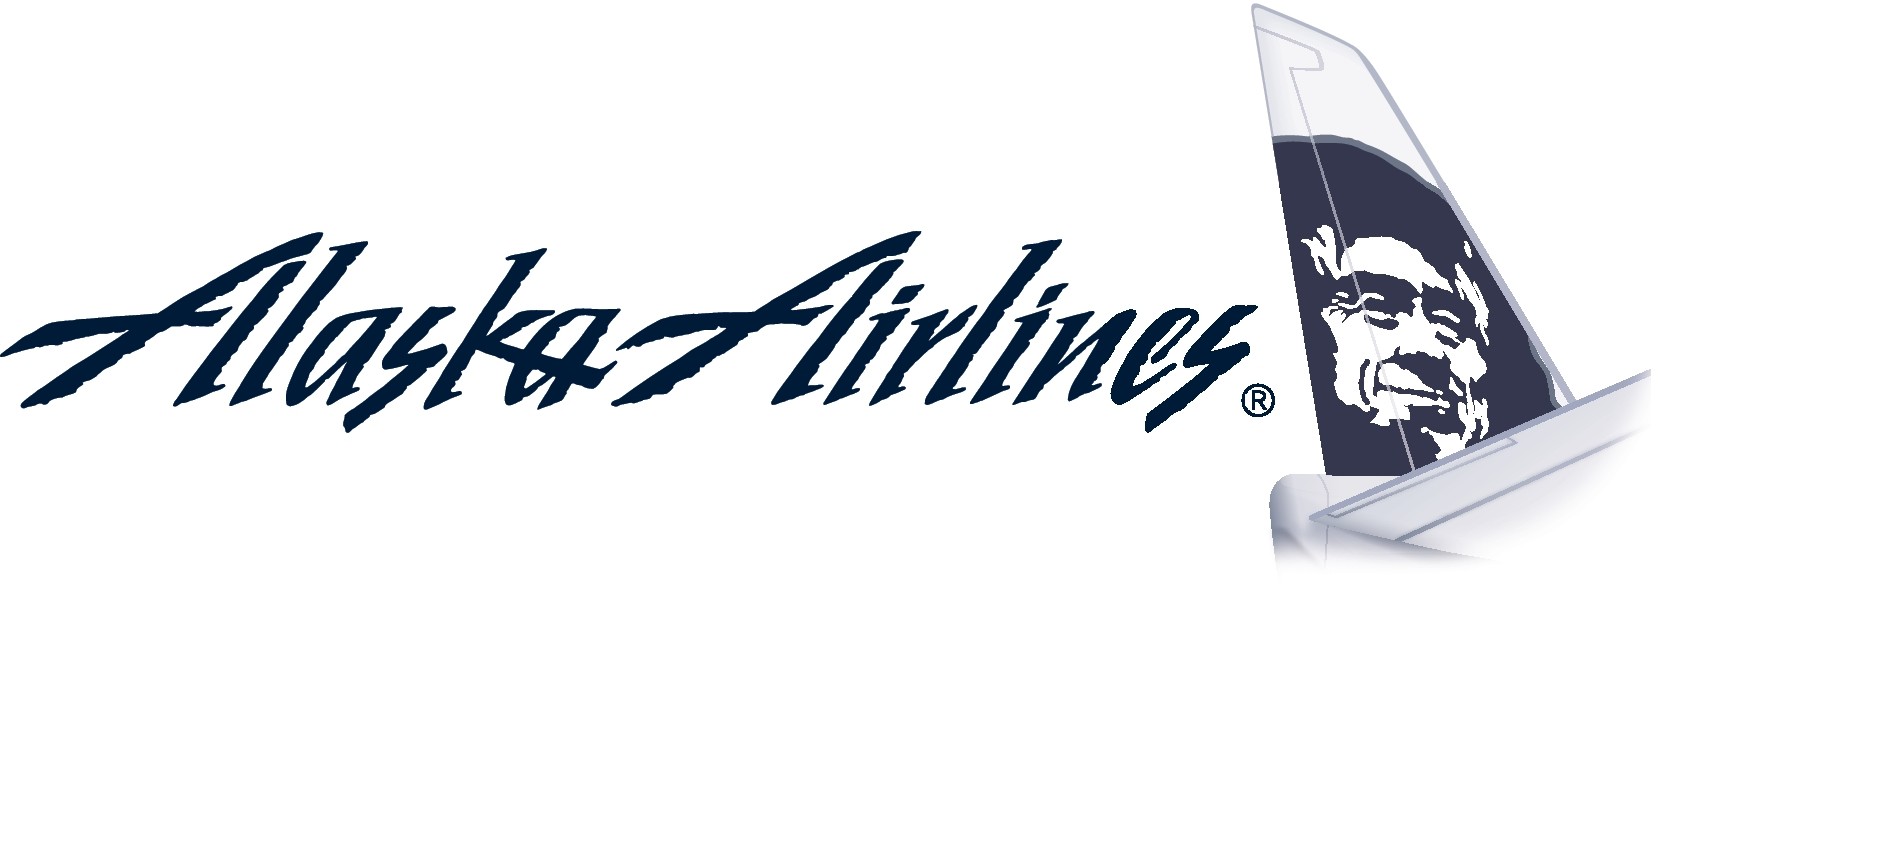 Logo Alaska Airlines - Alaska Airlines Vector, Transparent background PNG HD thumbnail